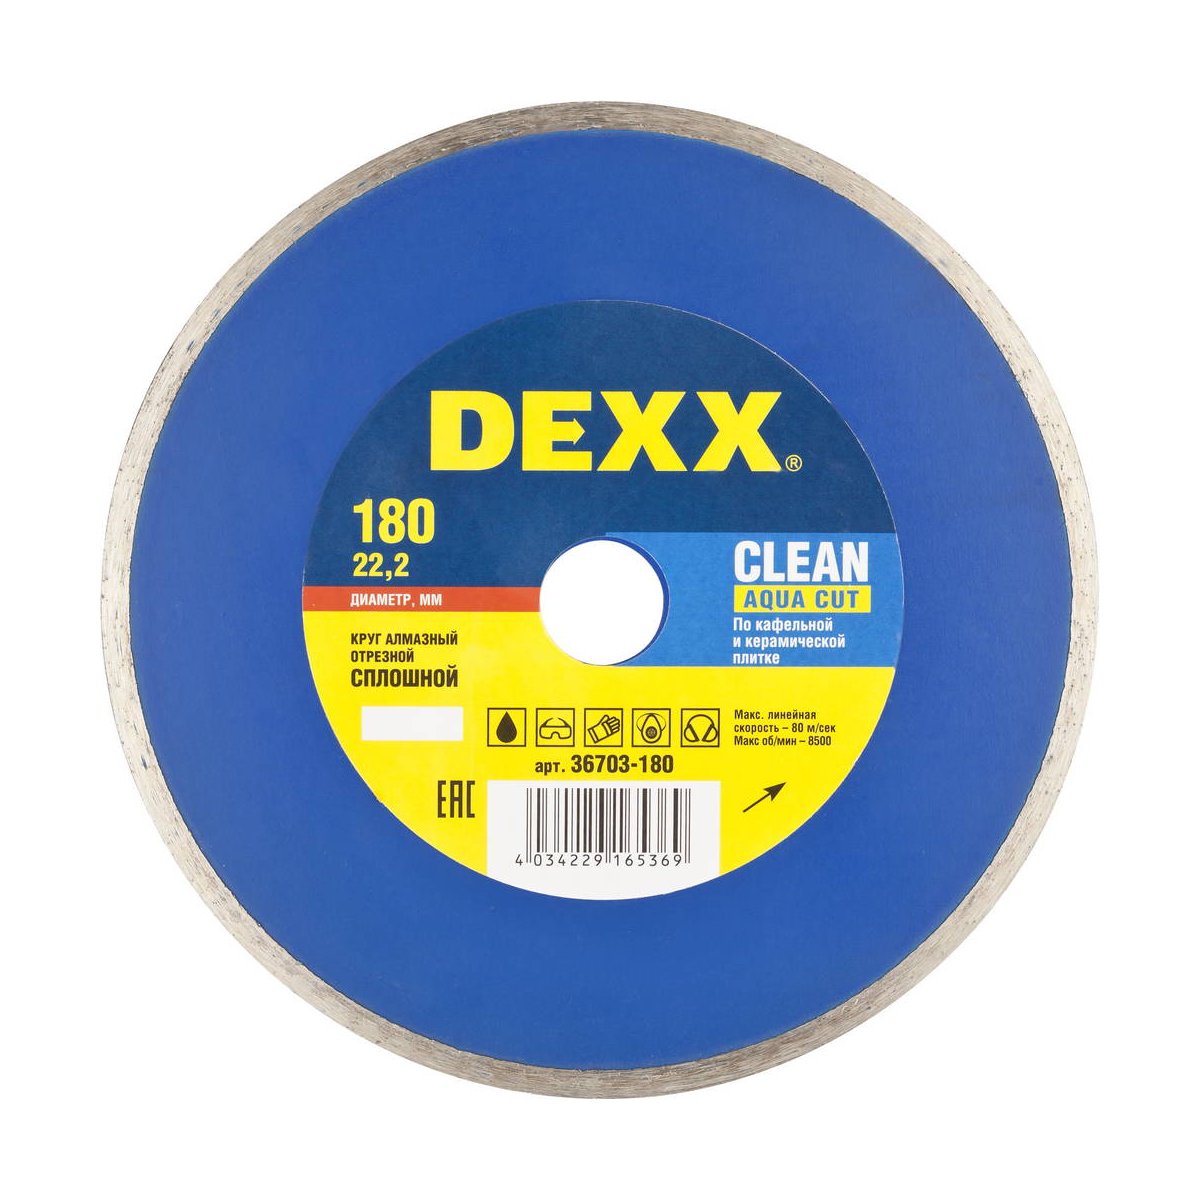 DEXX CLEAN AQUA CUT 180 ,          (18022.2 , 52.1 ), 36695-180 (36703-180)